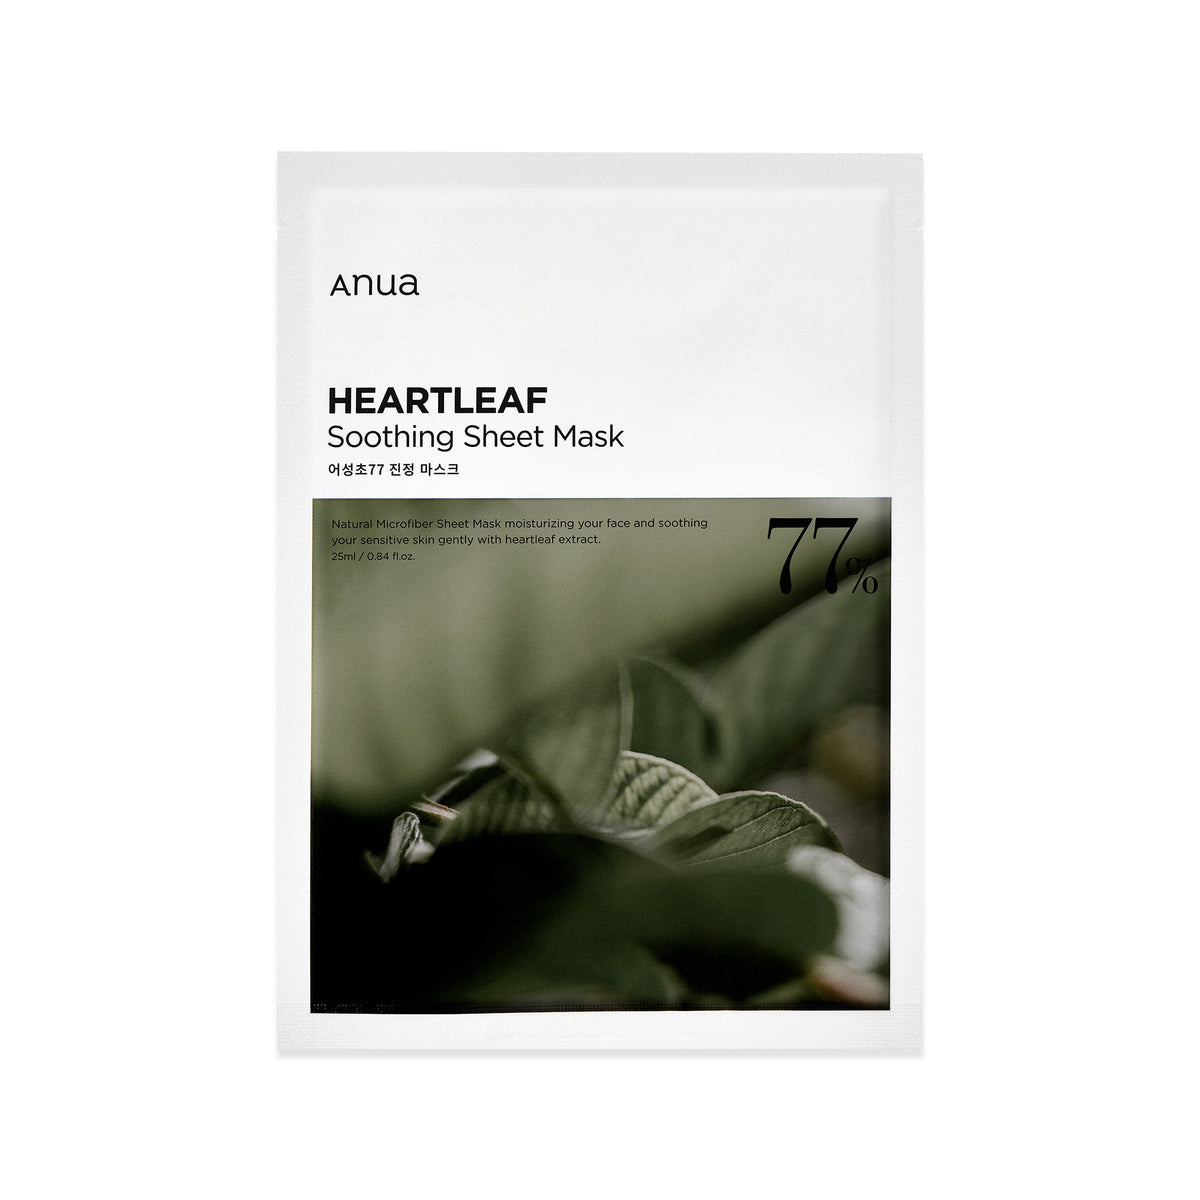 Anua Heartleaf 77% Soothing Sheet Mask 1 sheet - Anua | Kiokii and...